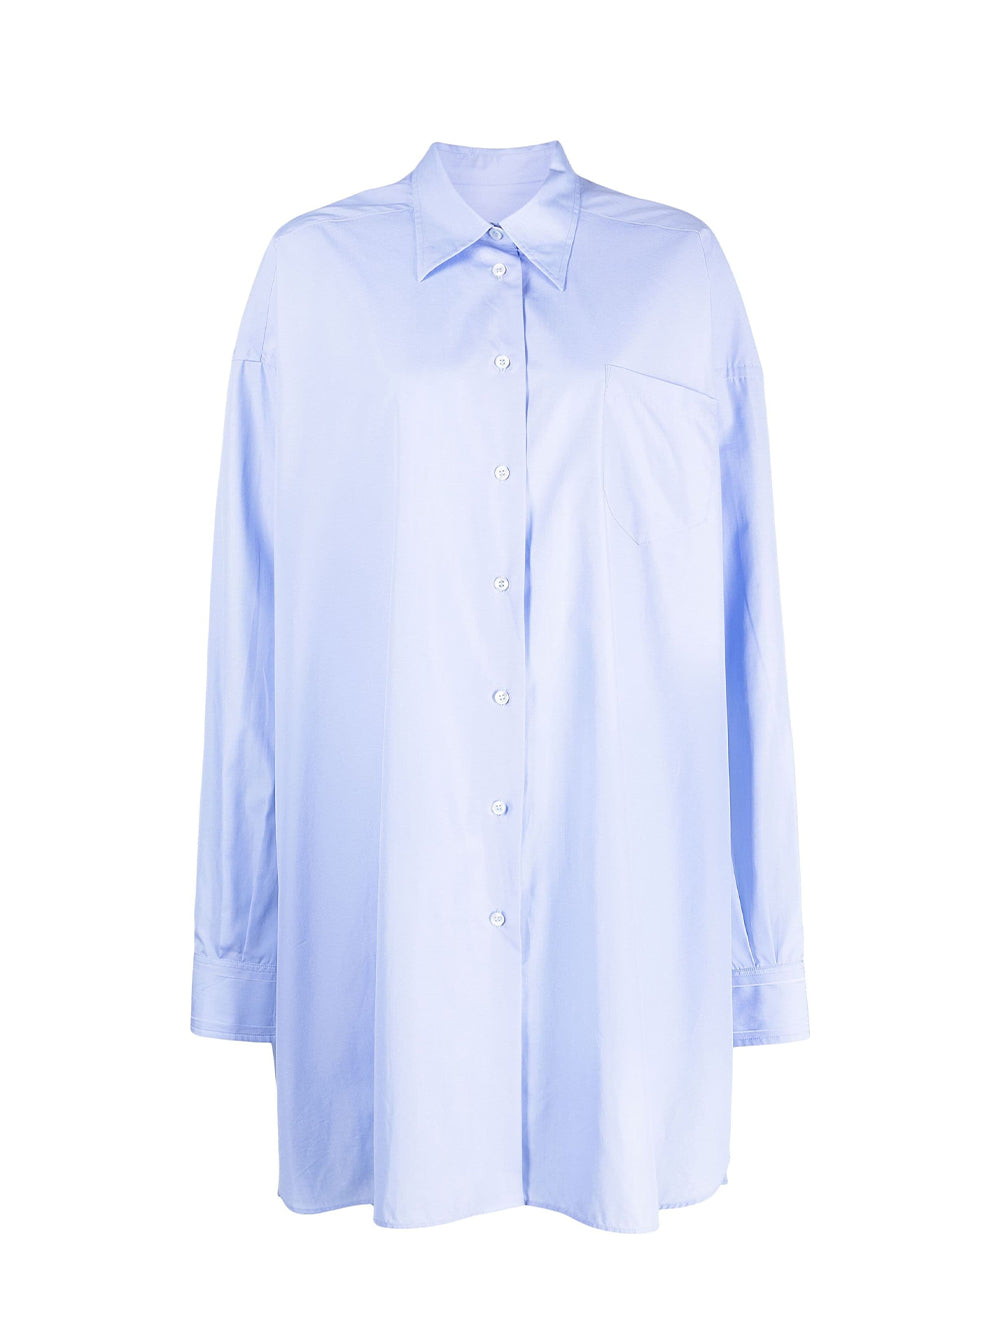 Long-Sleeved Shirt (Light Blue)